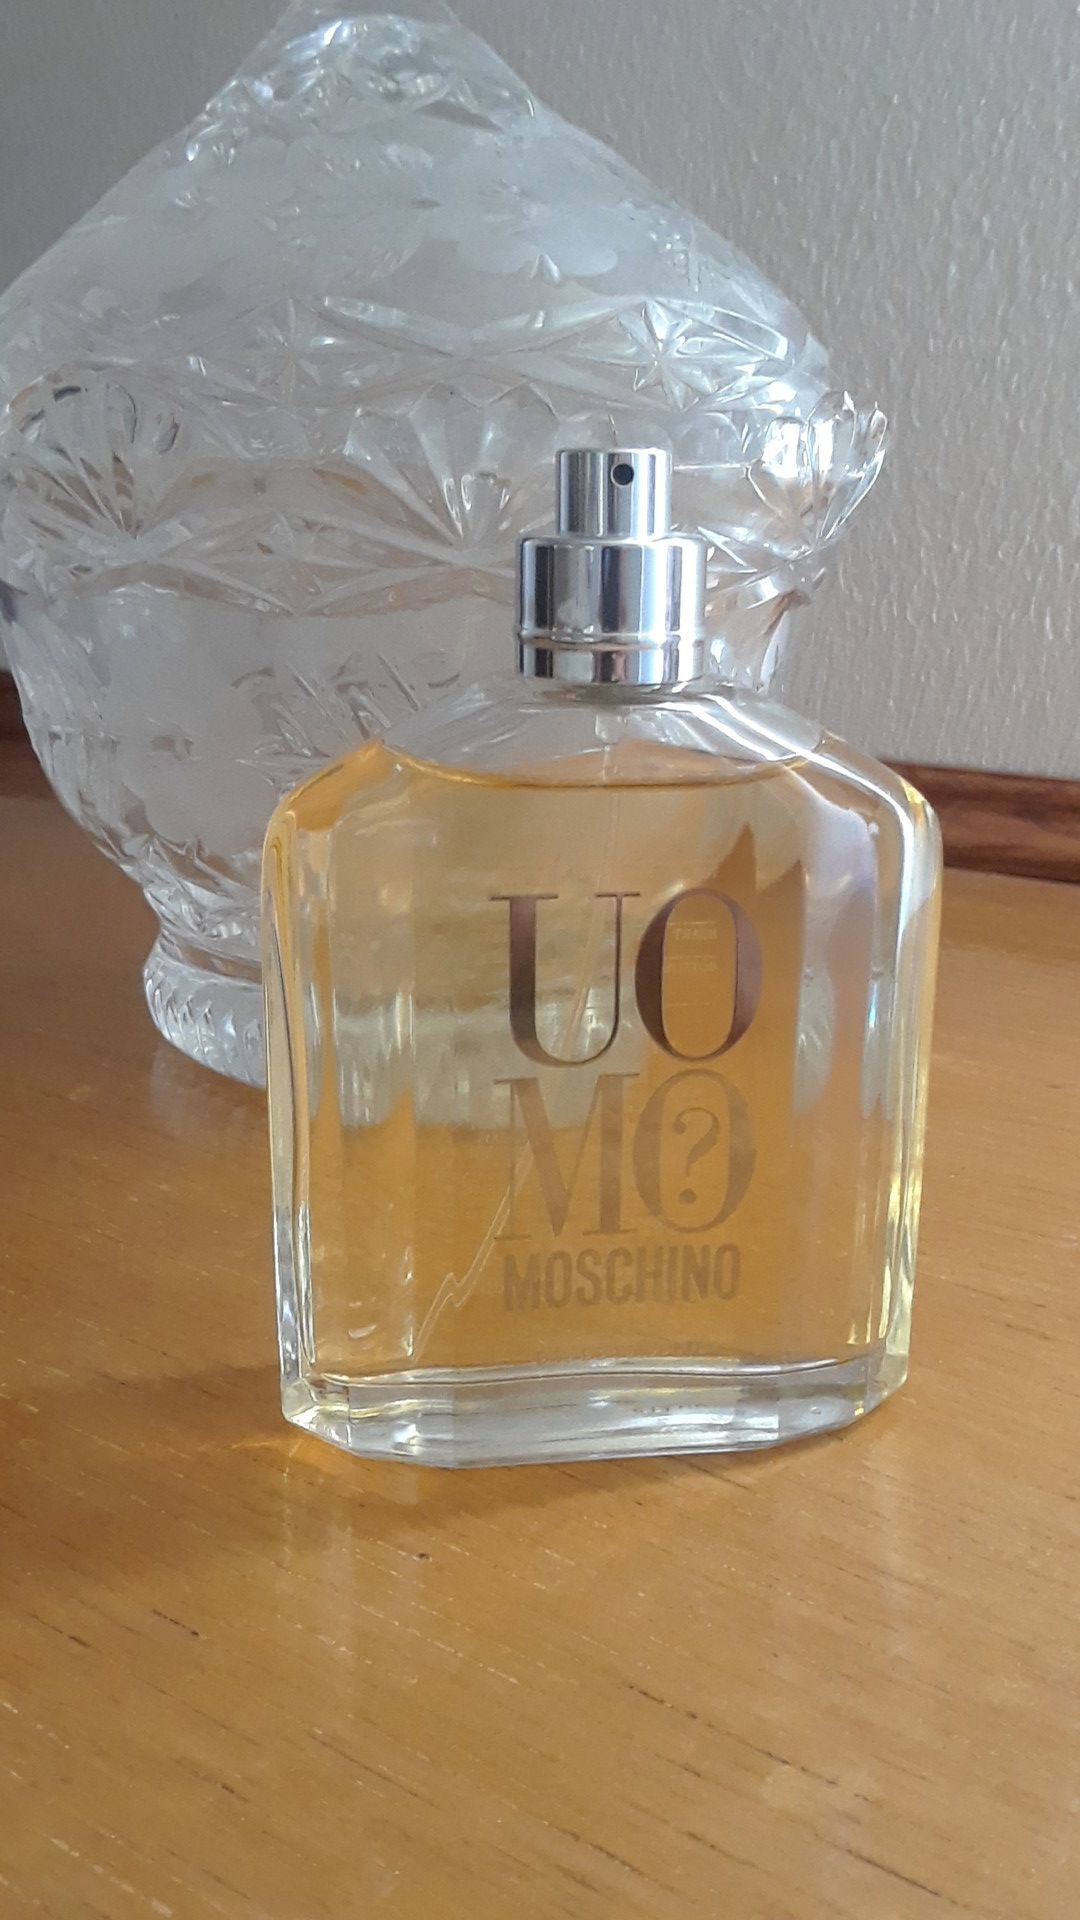 Moschino Uomo Cologne / Fragrance